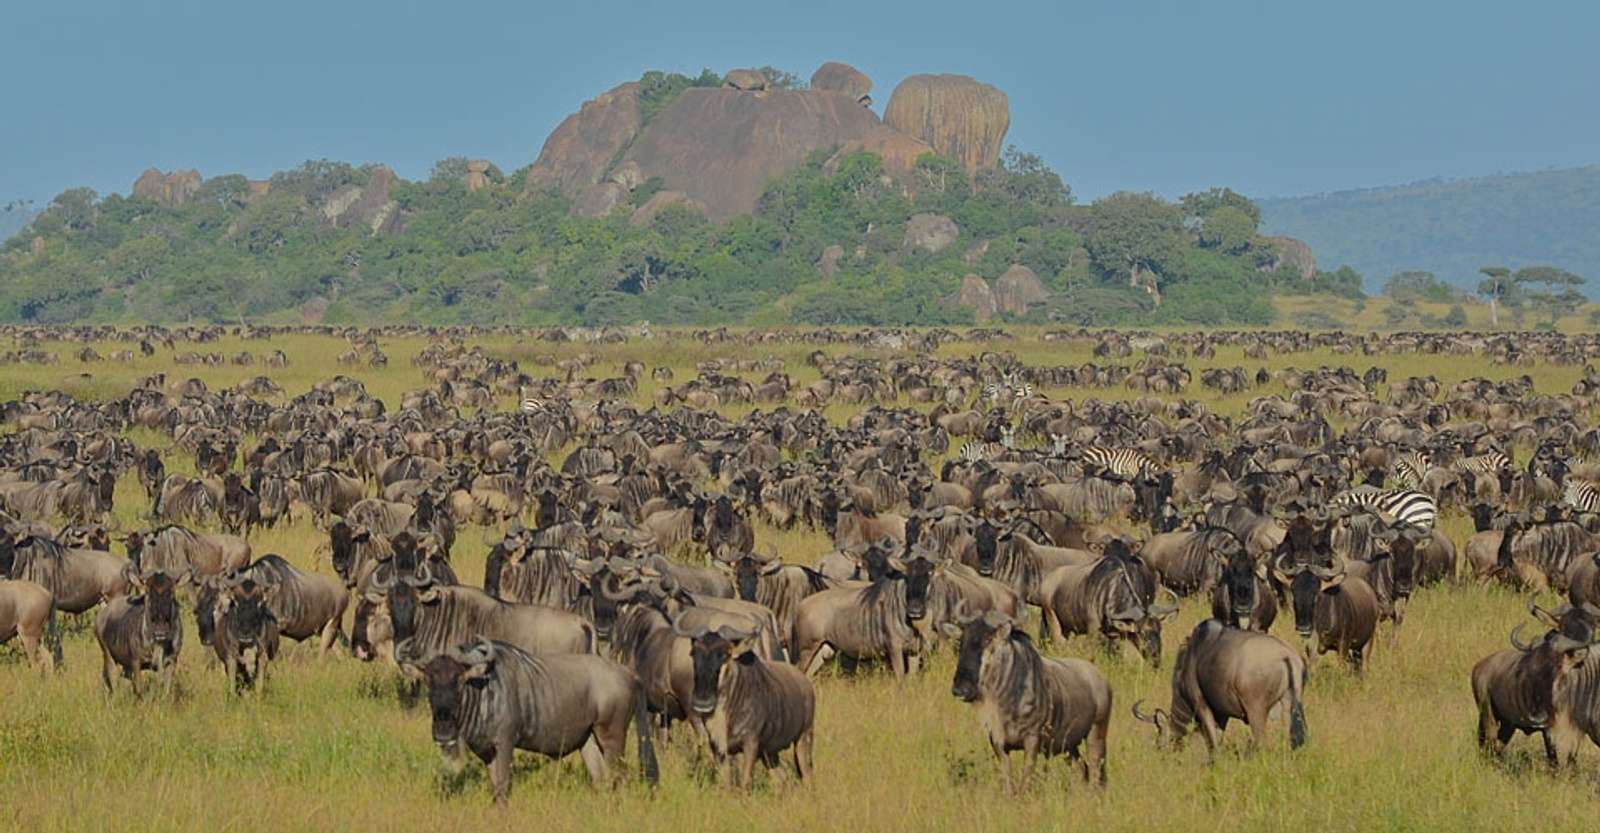 Wldebeests, Serengeti National Park, Tanzania.